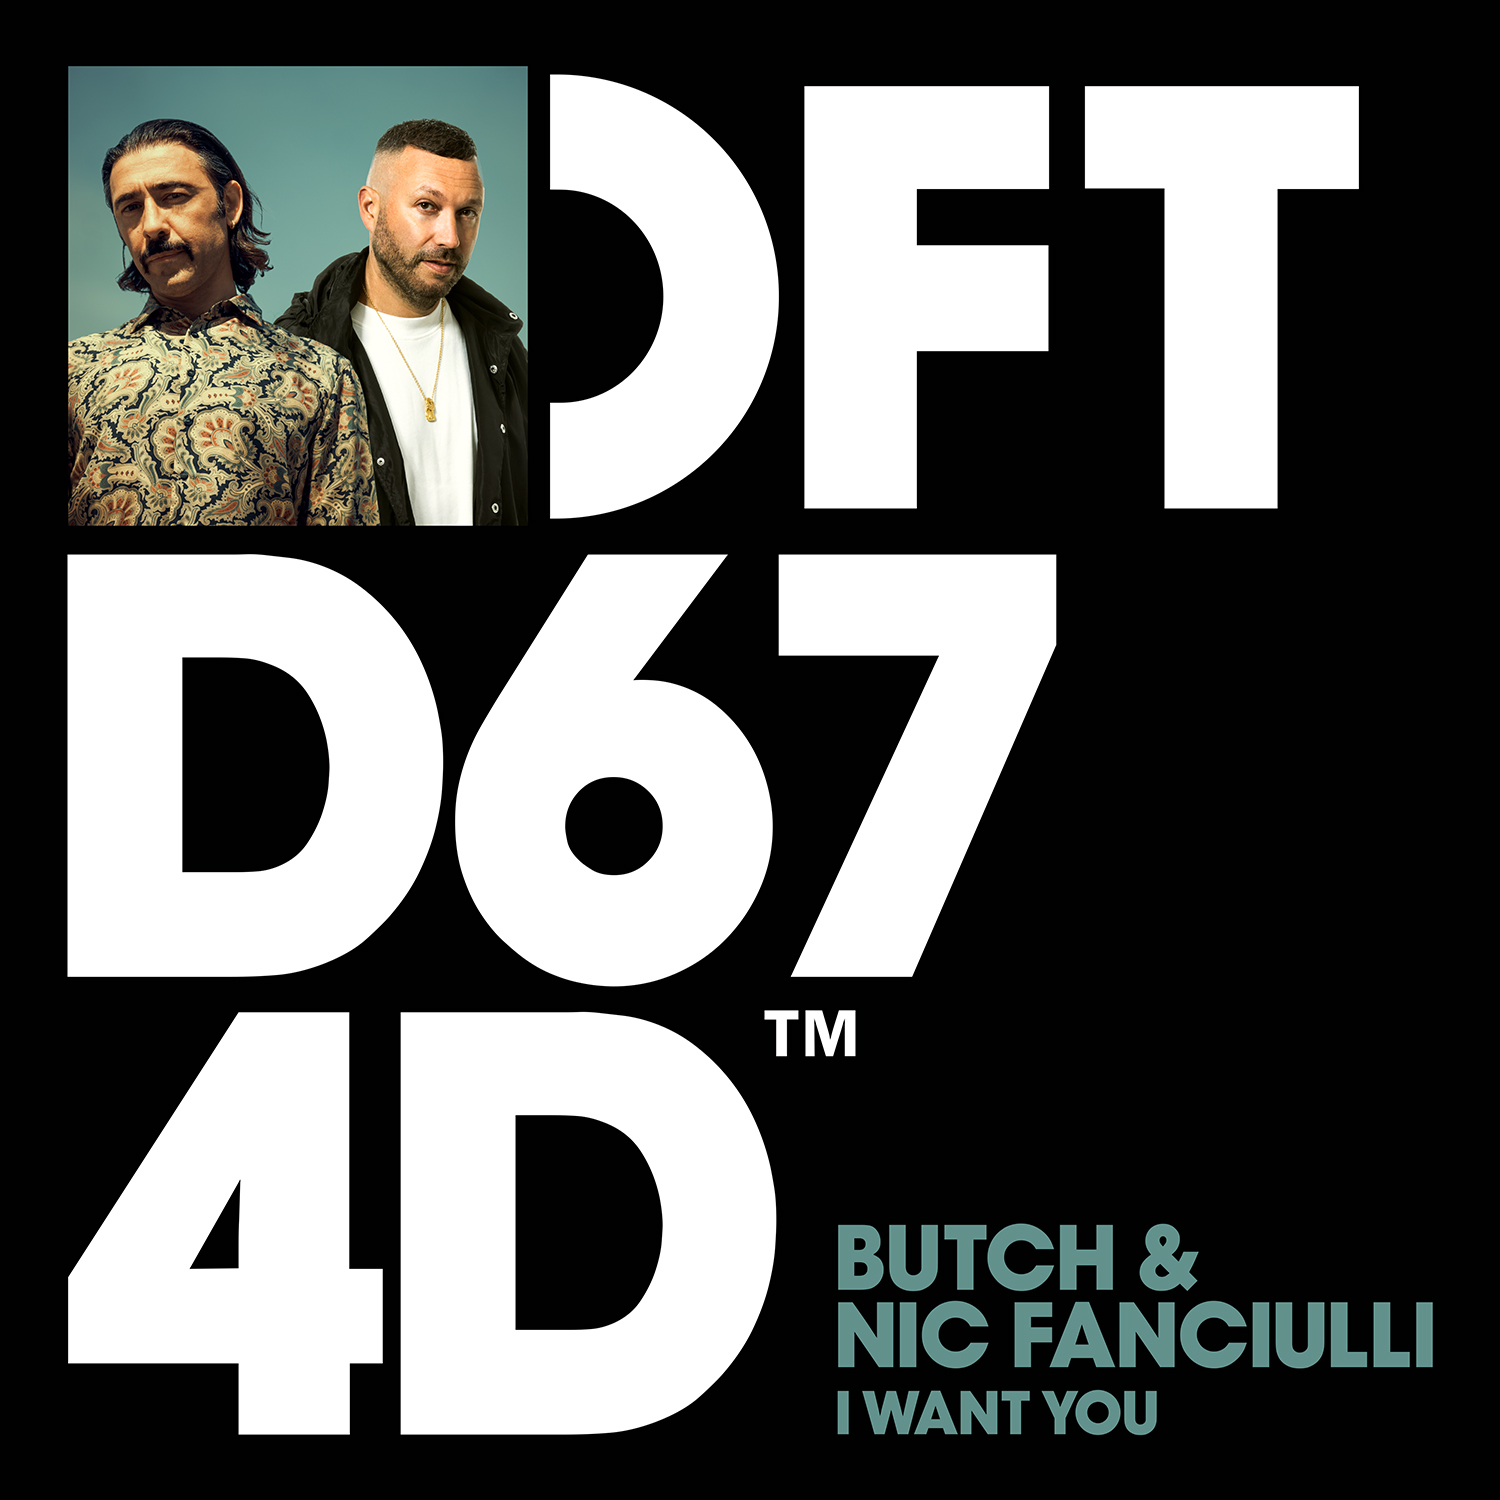 Butch & Nic Fanciulli Drop Hot New Ibiza Anthem “I Want You”